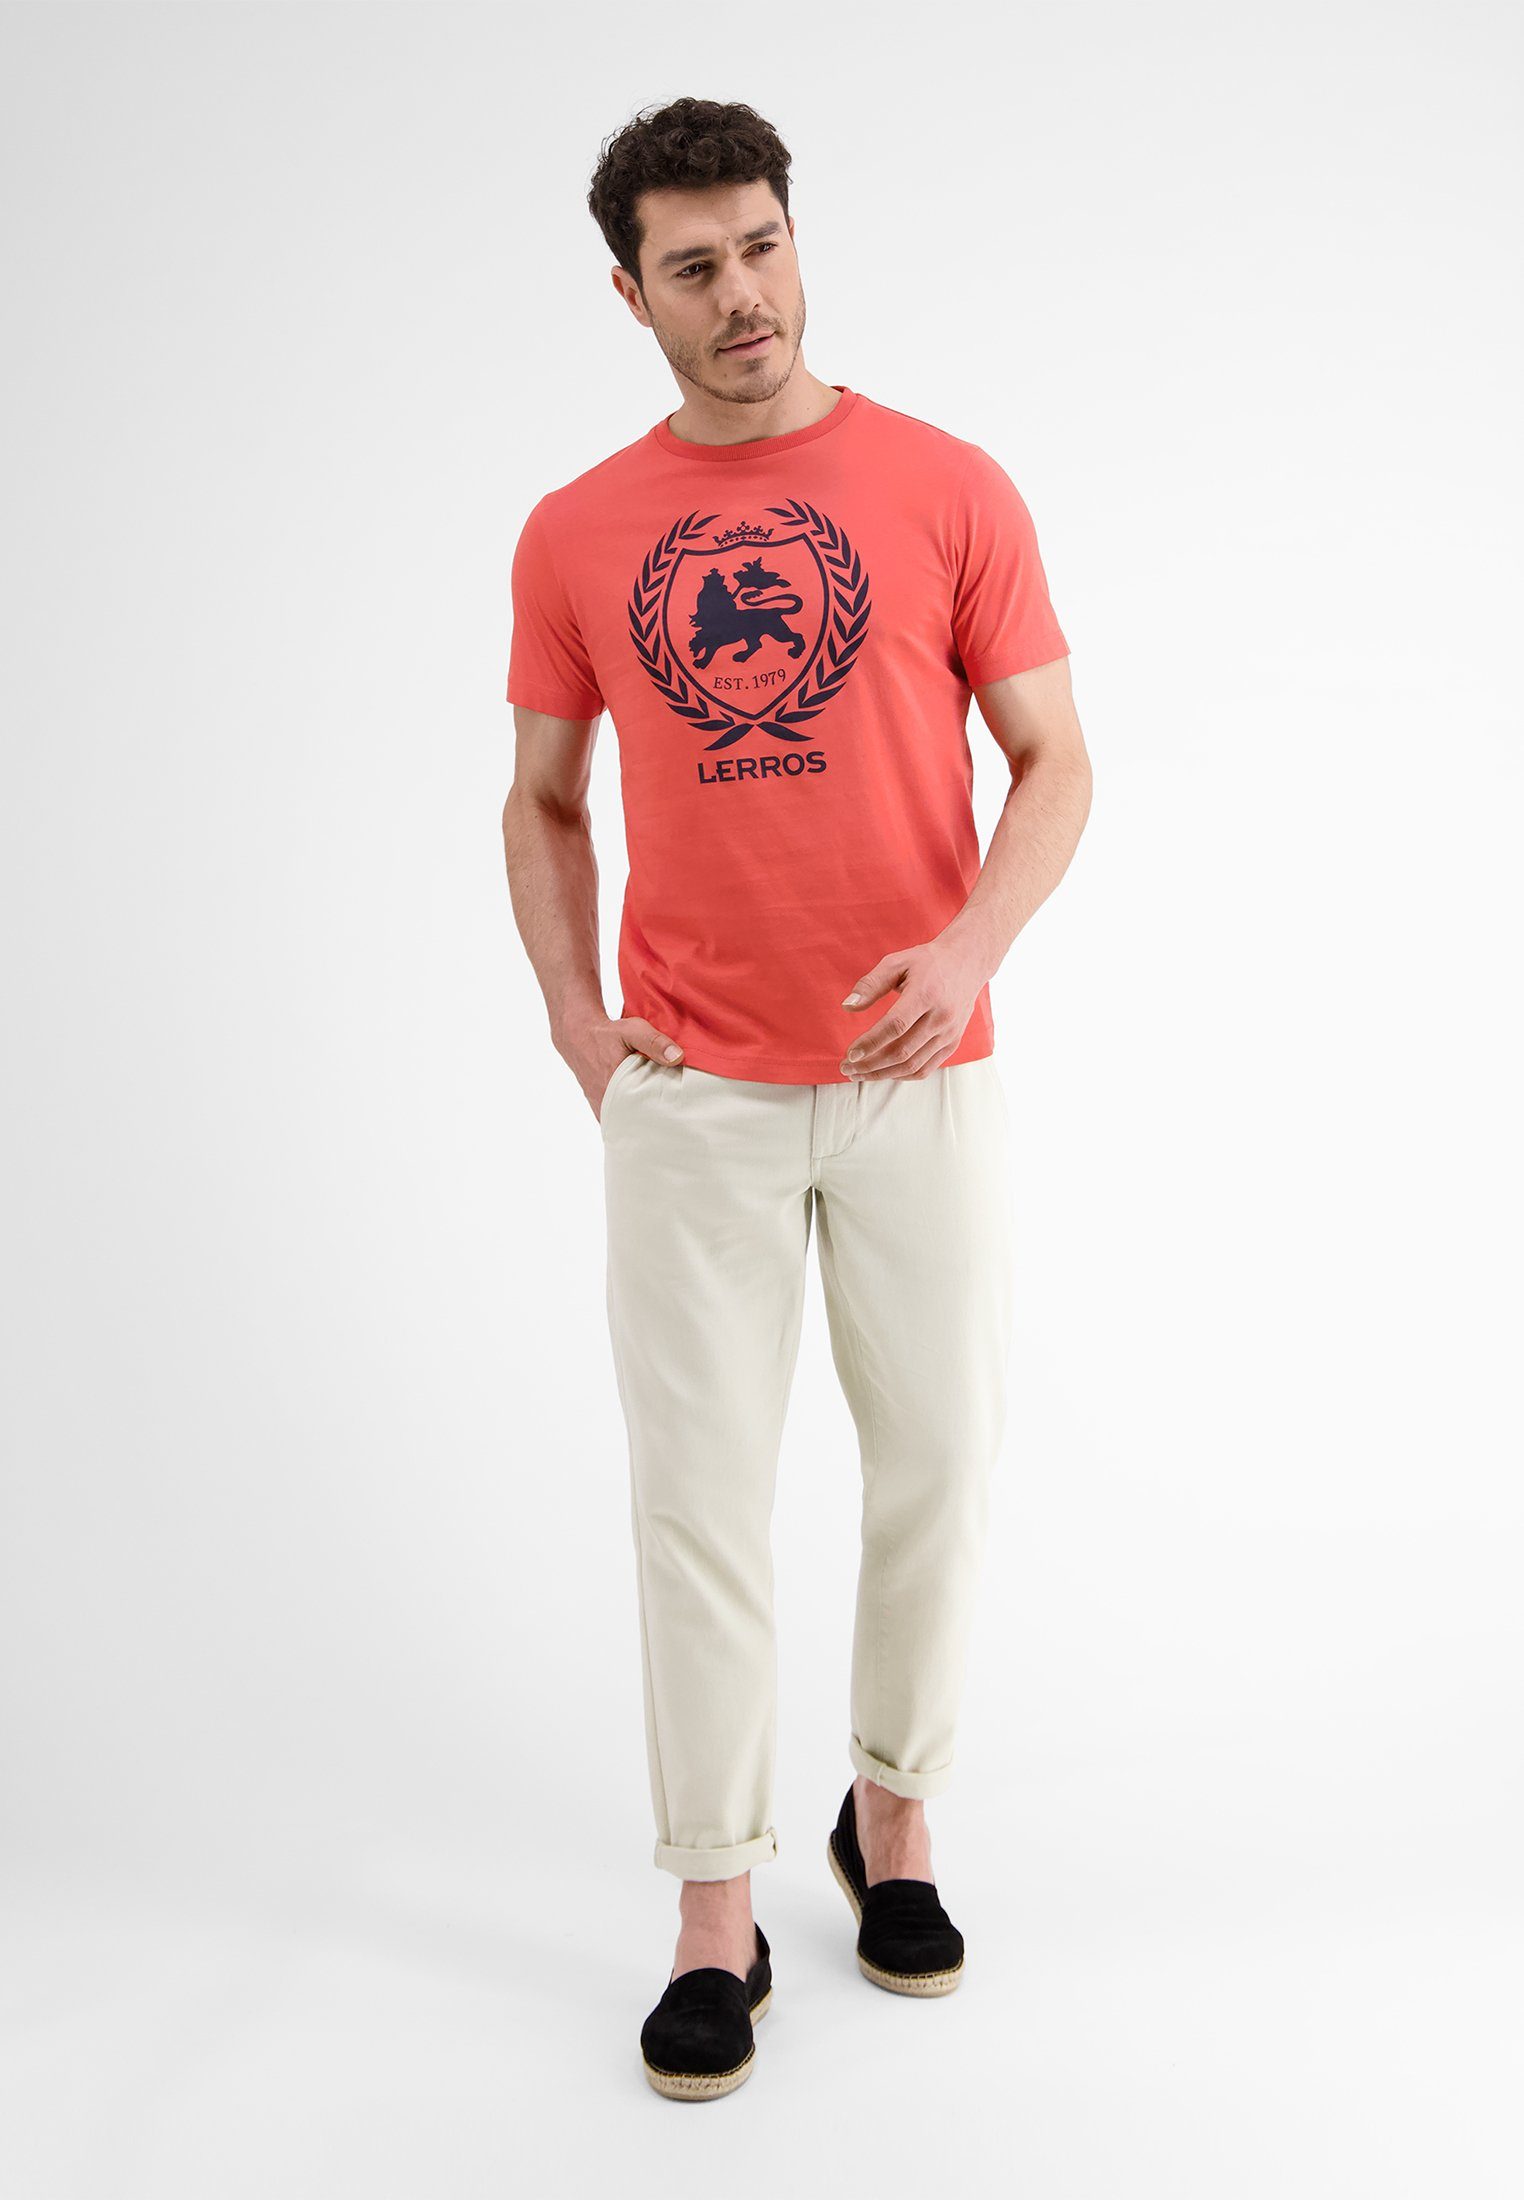 T-Shirt HIBISCUS RED Logoprint LERROS T-Shirt, LERROS